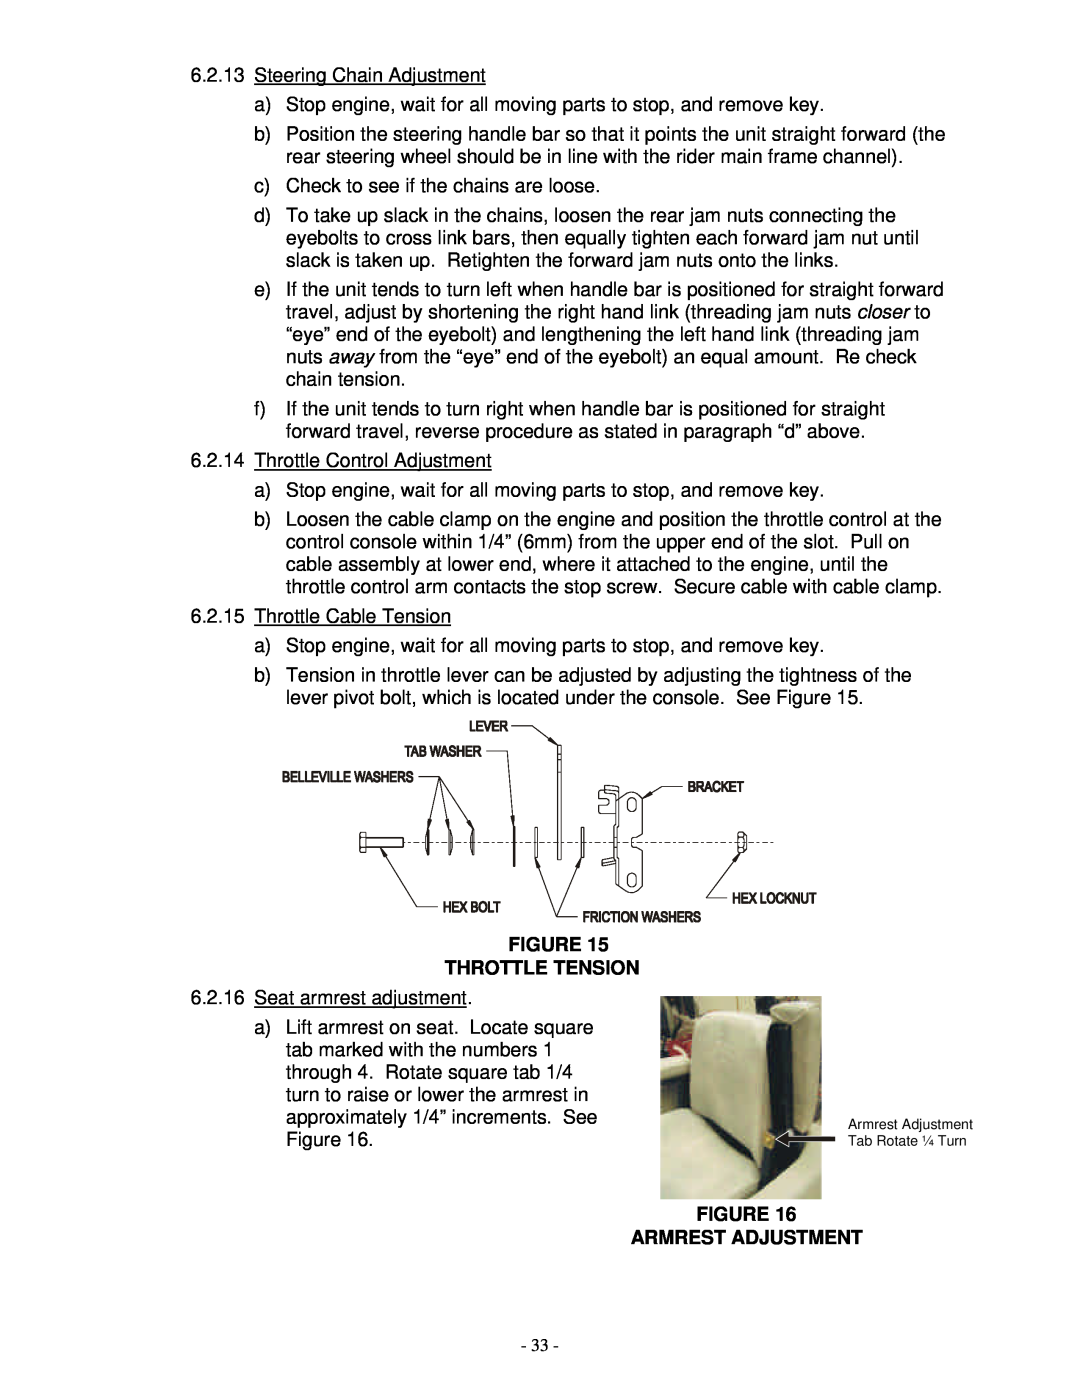 Exmark FMD 524, FMD 604 manual Throttle Tension, Armrest Adjustment Tab Rotate ¼ Turn 